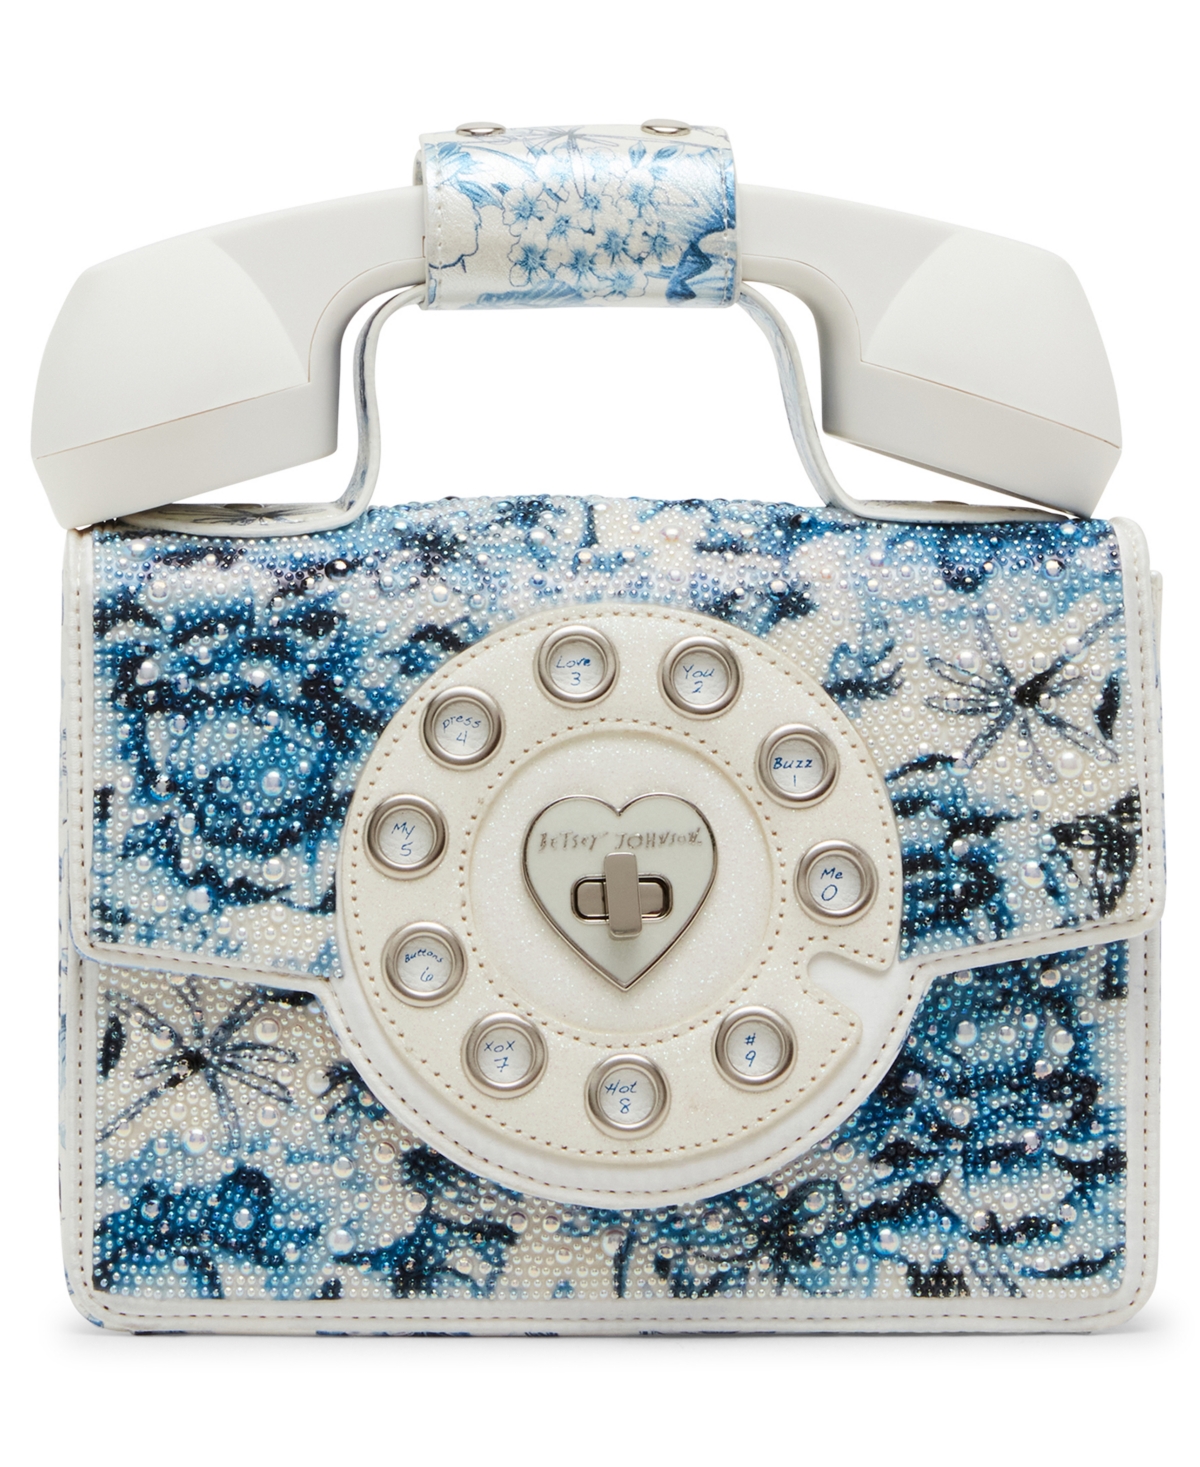 Toile Imitation Pearl Phone - Blue Multi